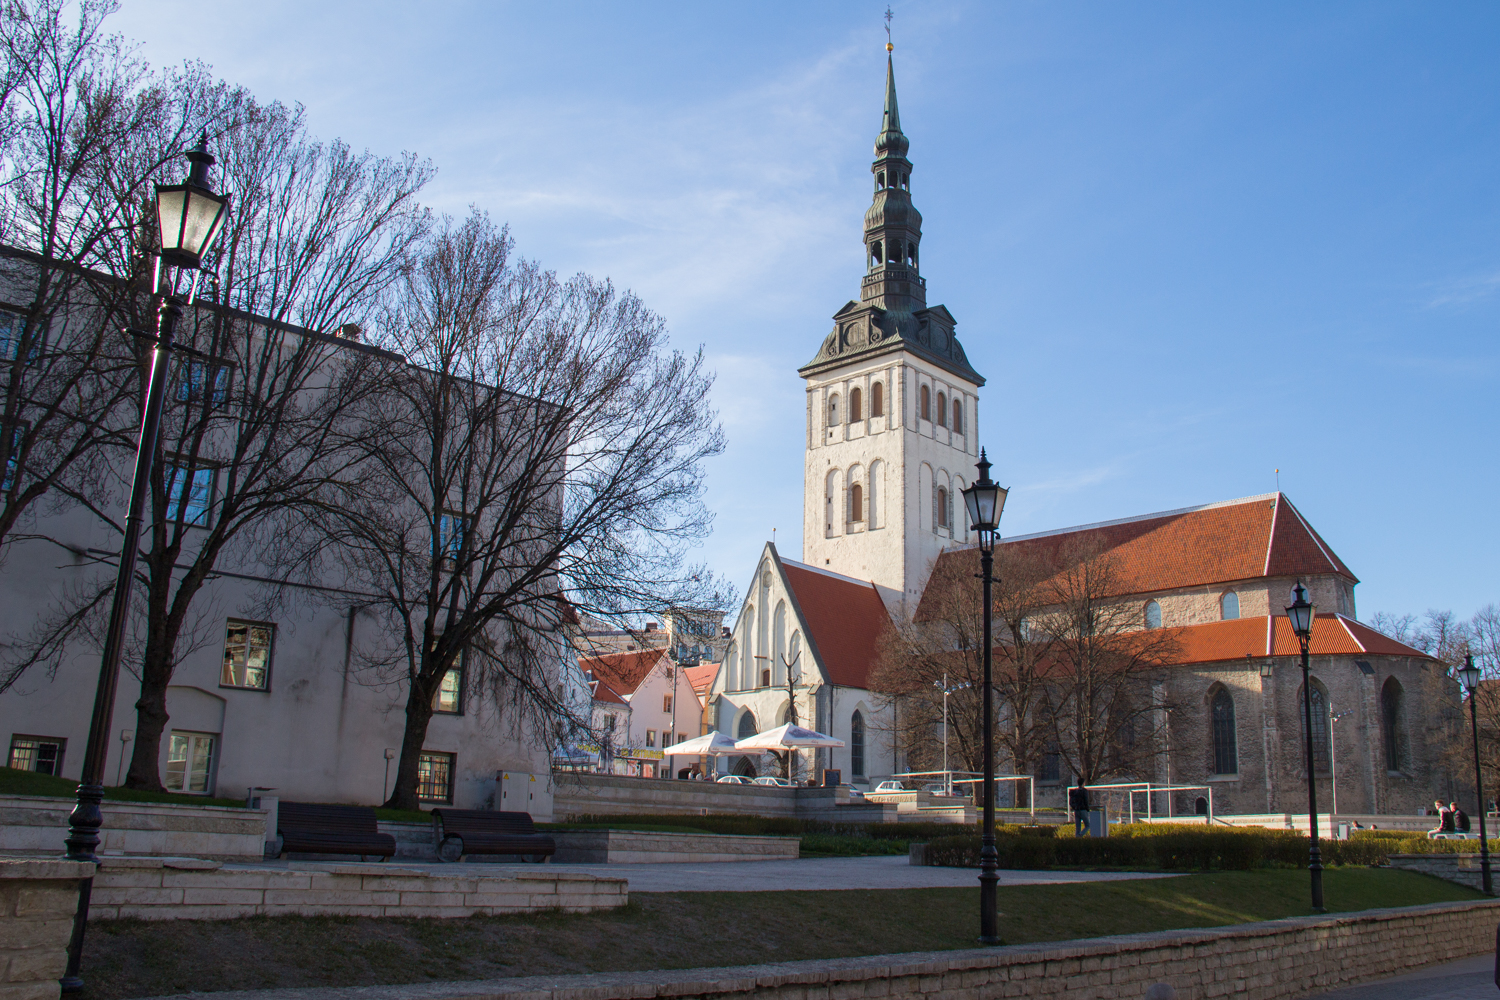 Harju Street in front of the Niguliste Church in Tallinn, Estonia